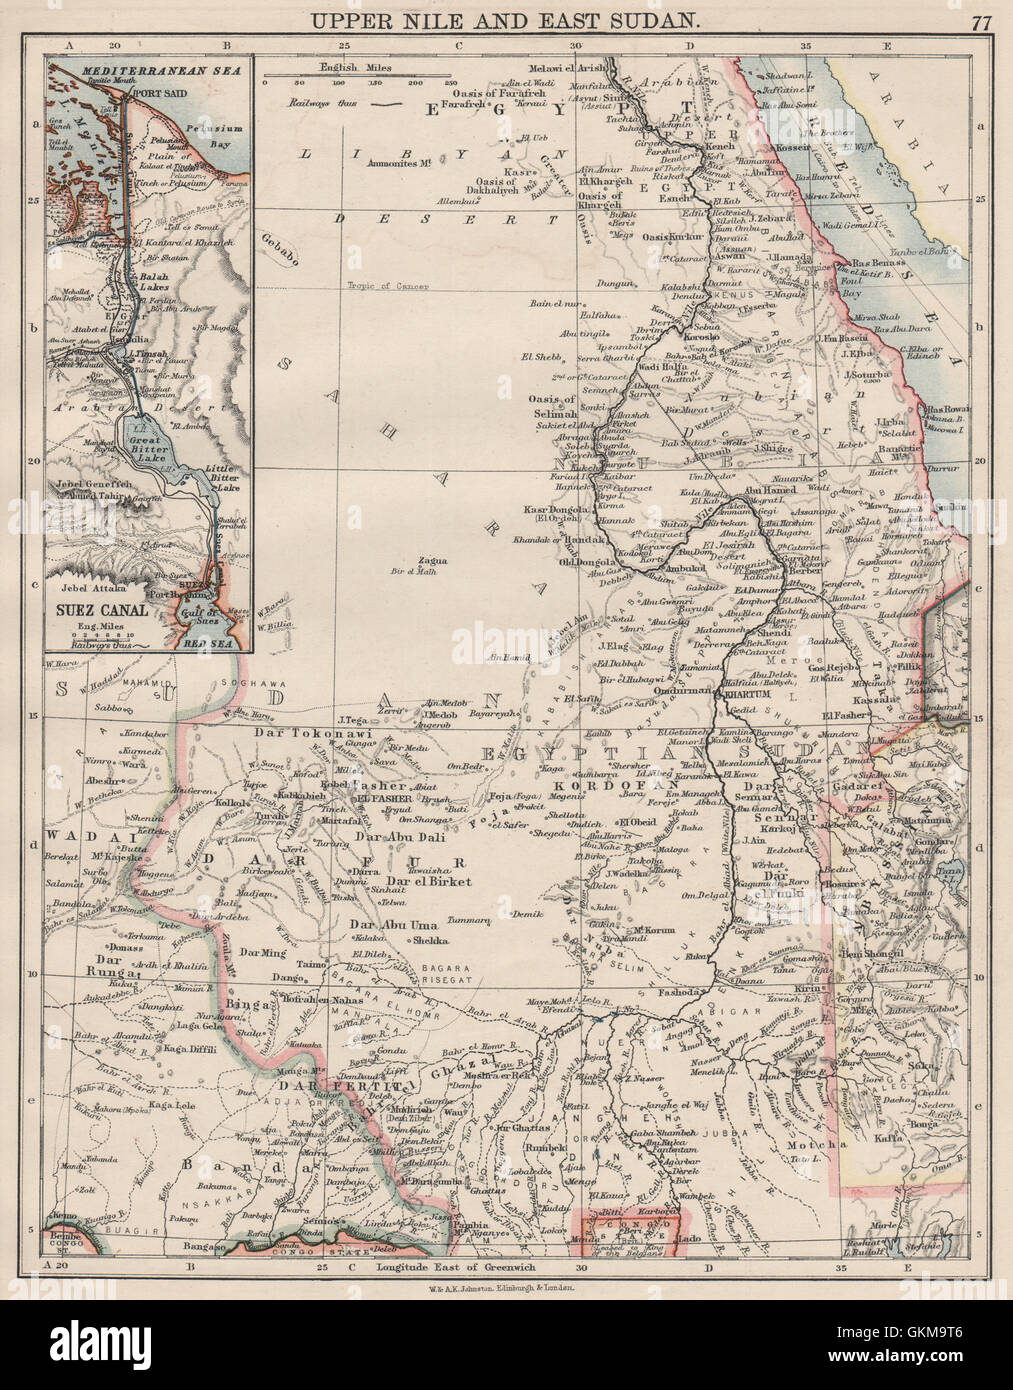 UPPER NILE, EAST SUDAN & SUEZ CANAL. Khartoum.White/Blue Nile. JOHNSTON 1900 map Stock Photo